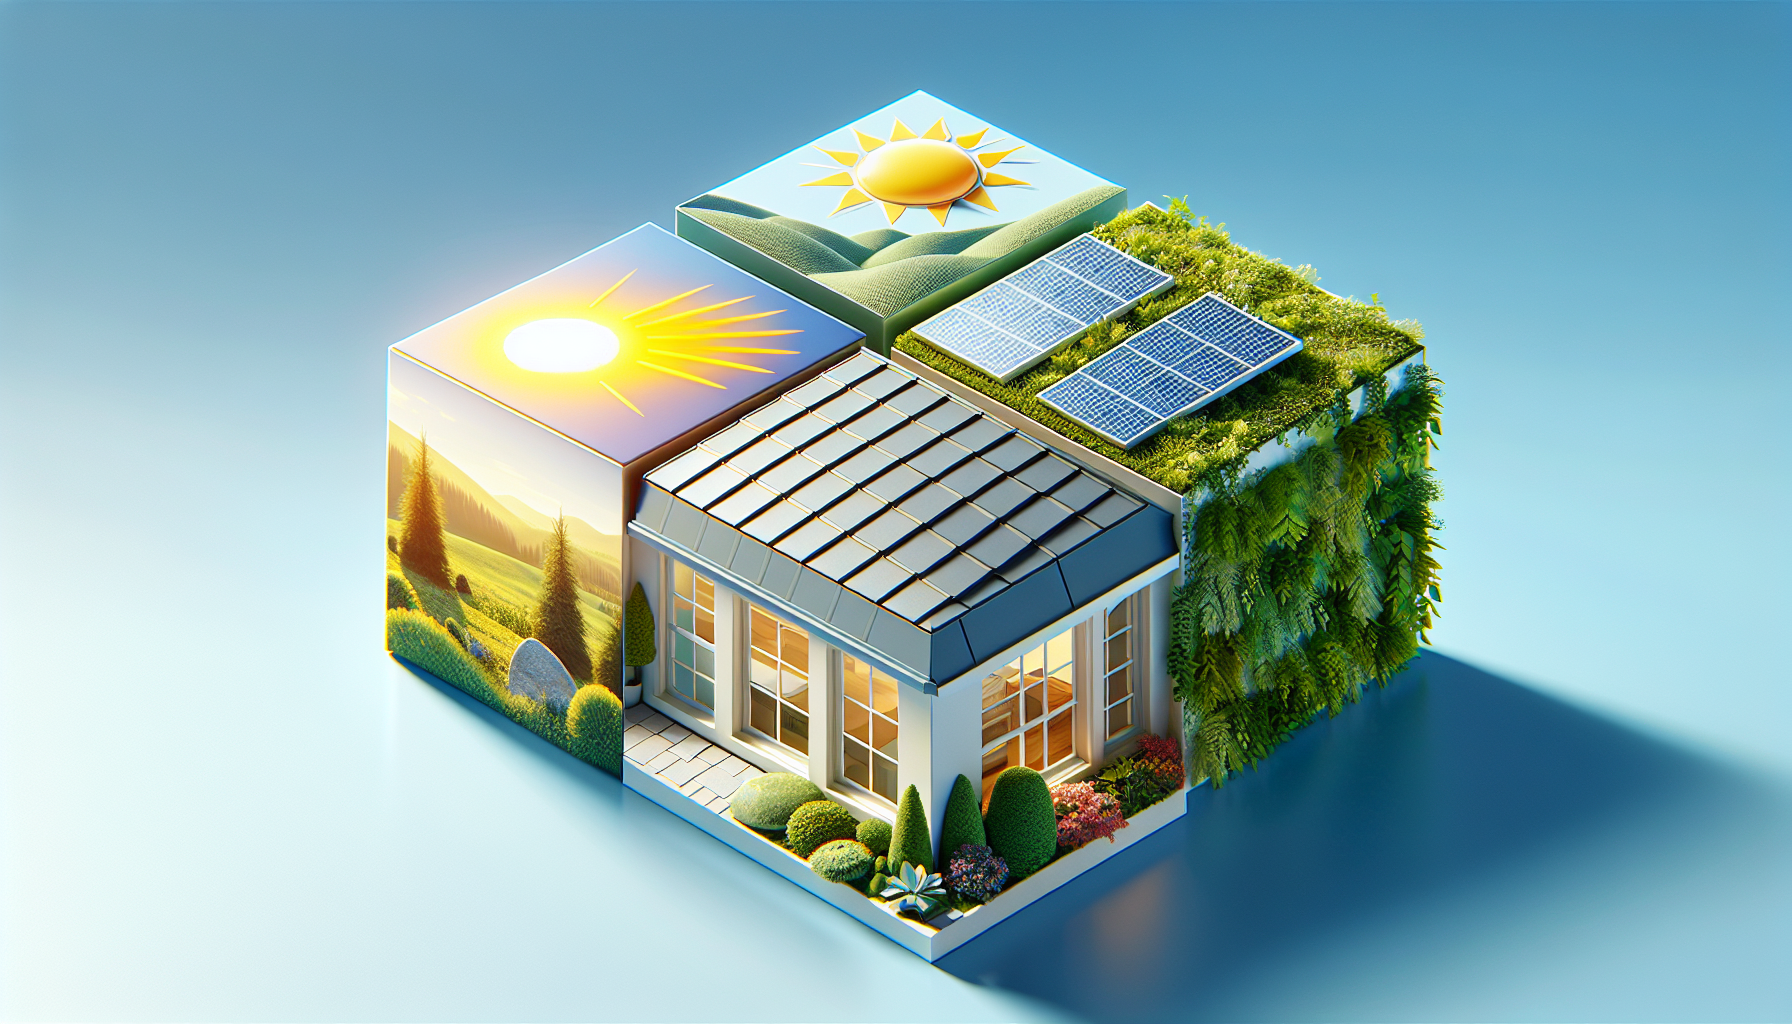 Energy-efficient roof materials